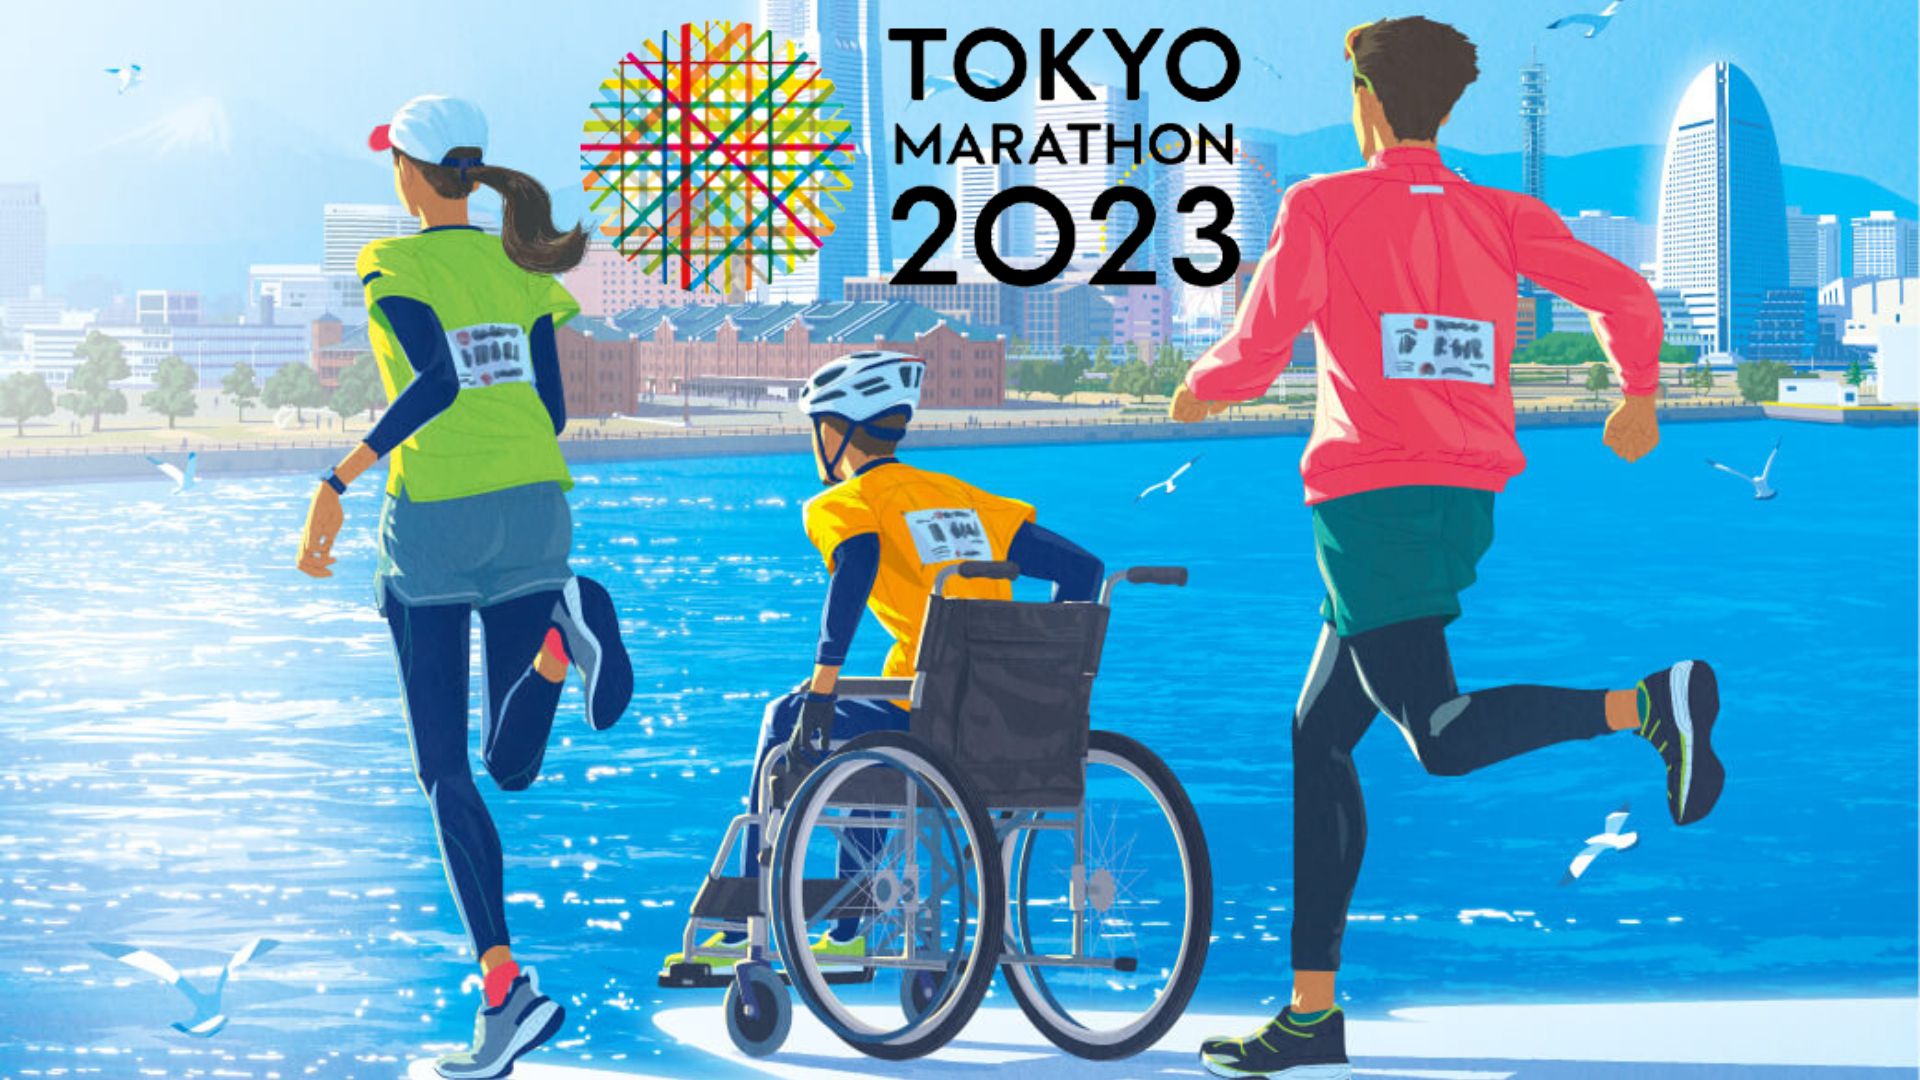 Tokyo Marathon 2023 Race Start time, Schedule, Live Broadcast